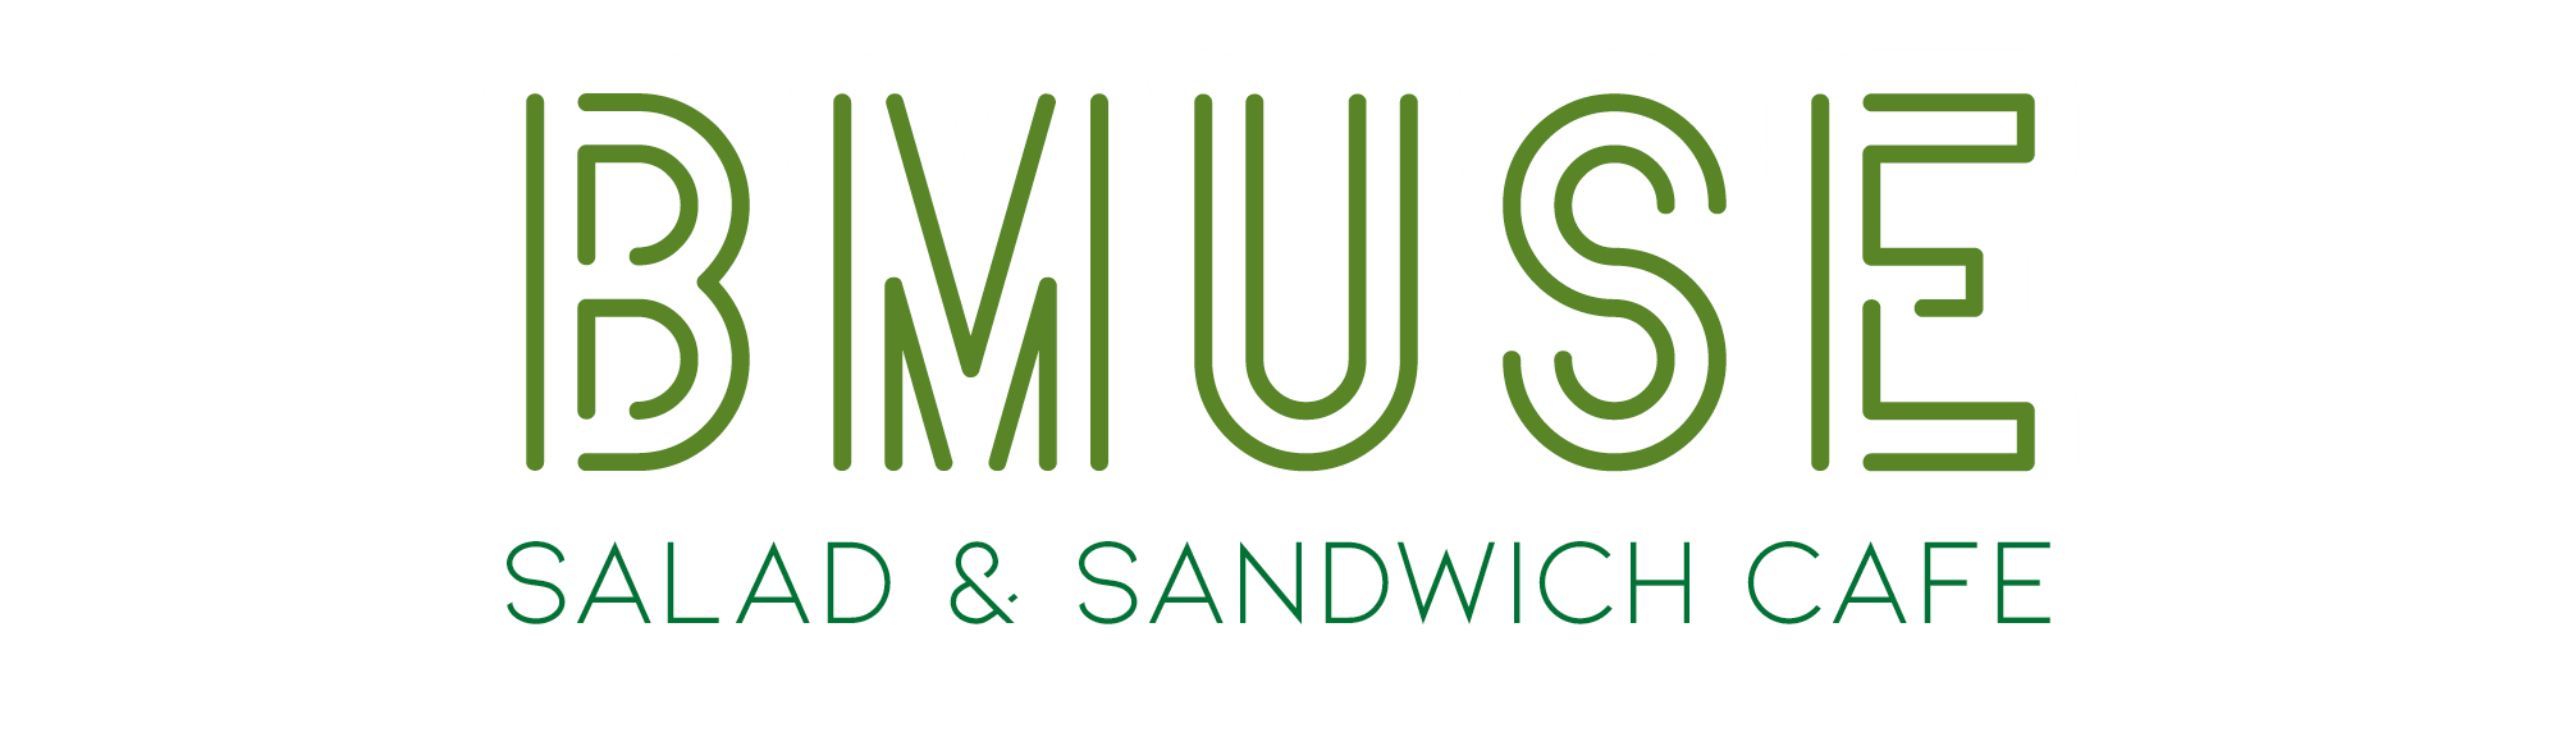 BMuse Cafe  Logo